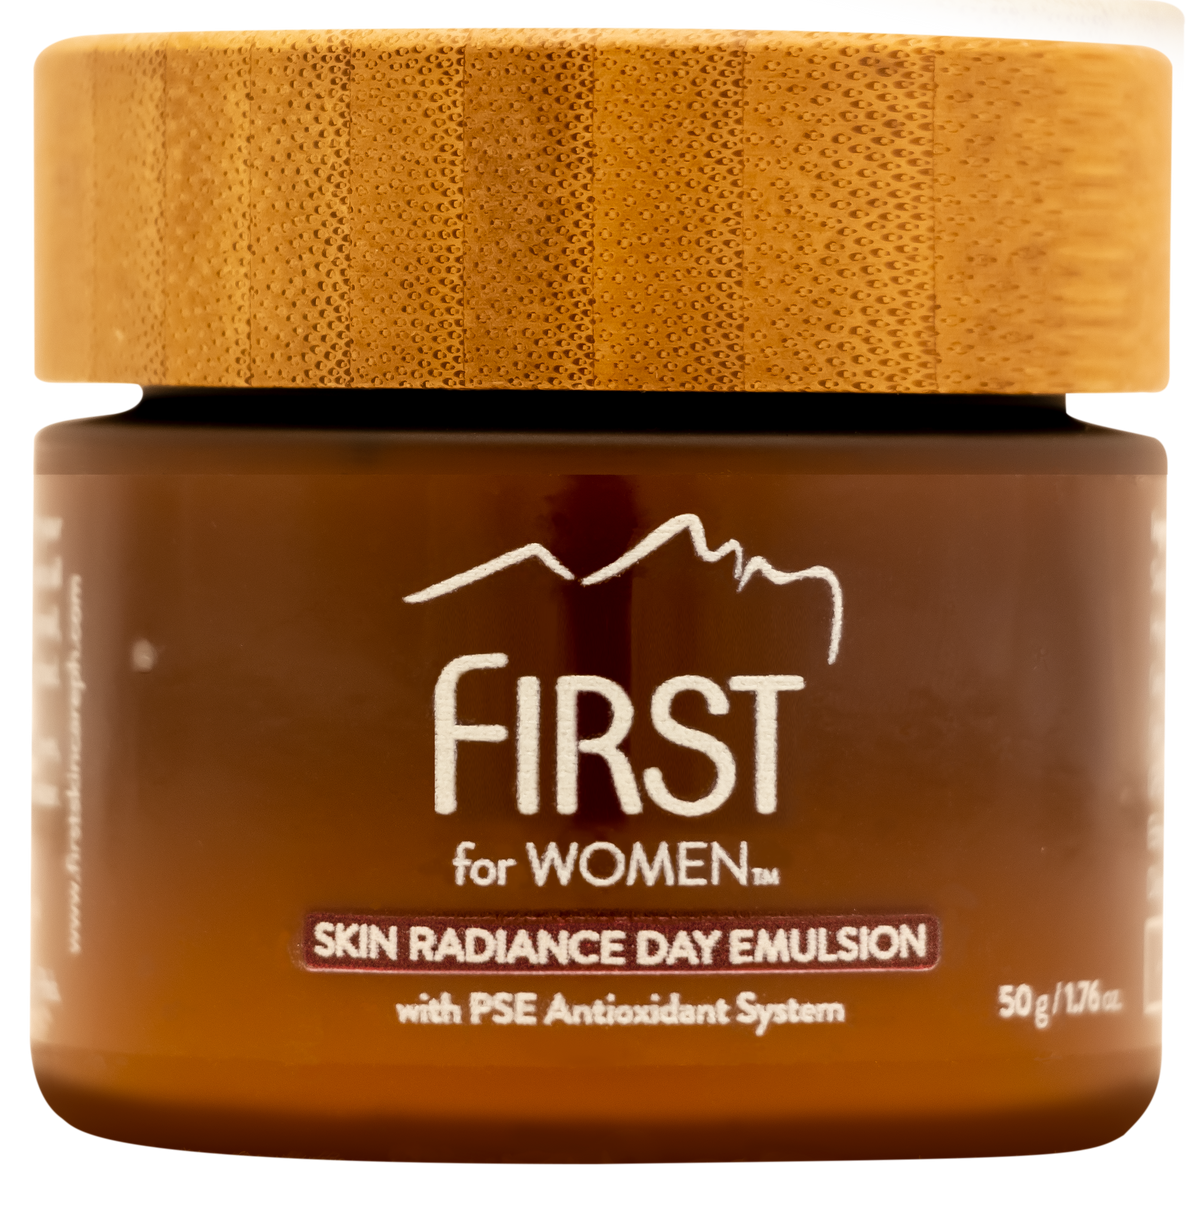 FIRST for Women Skin Radiance Day Emulsion 50g